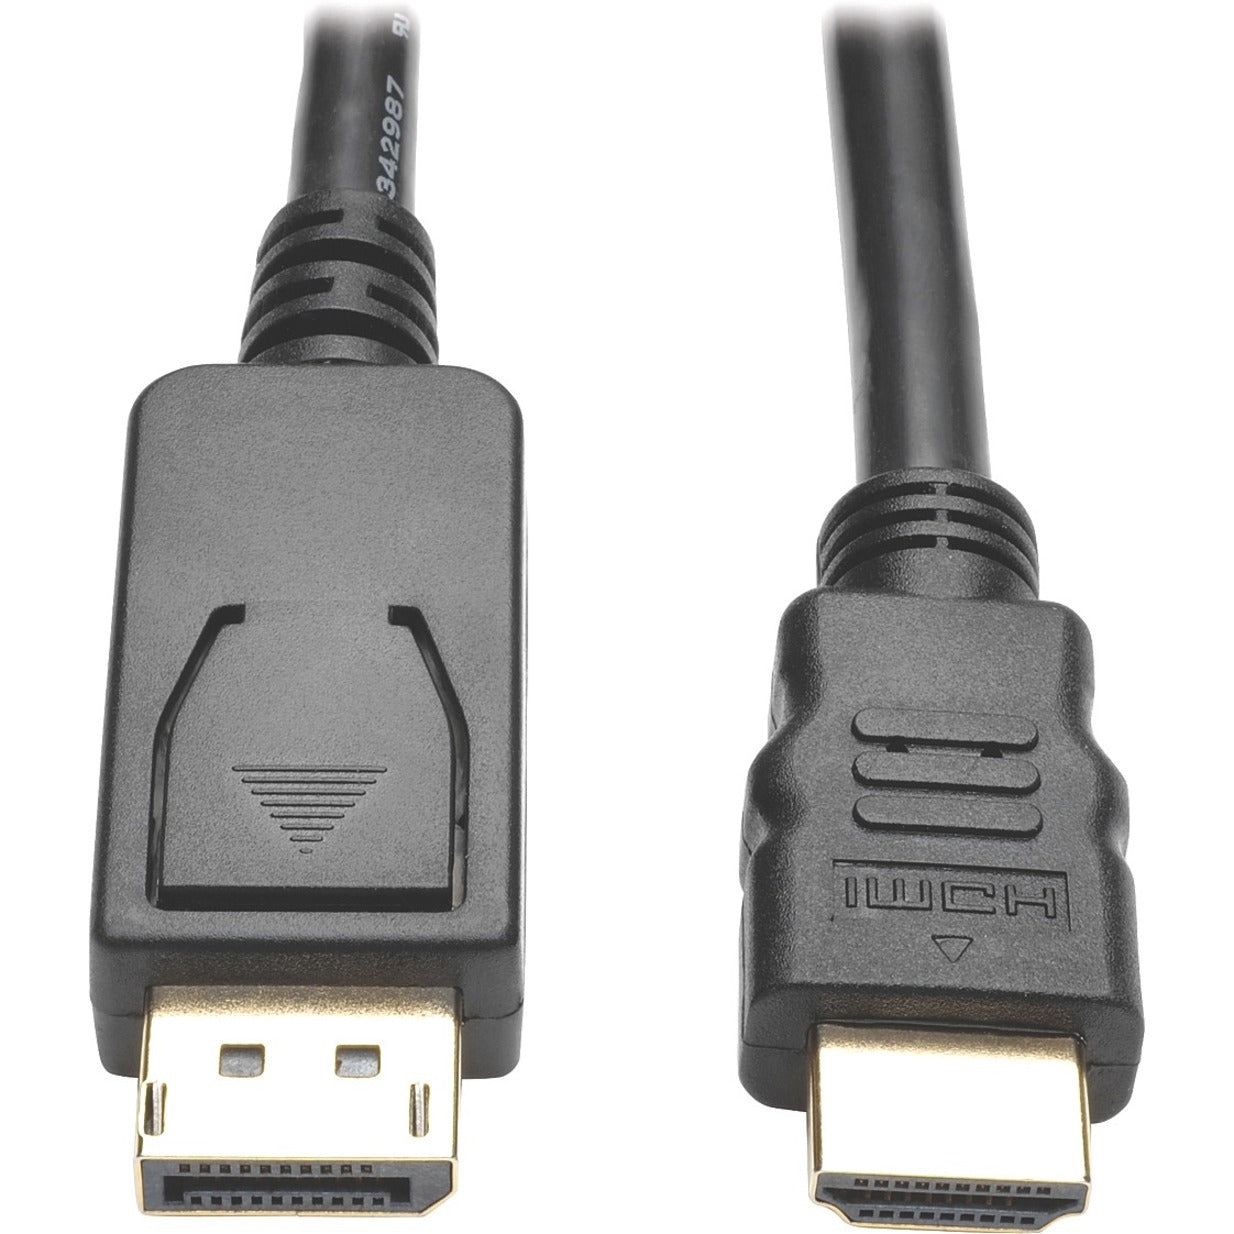 Tripp Lite P582-006-V2-ACT DisplayPort/HDMI 电缆，6 英尺，主动型，镀金 Tripp Lite 的品牌名称翻译是 锐派利特